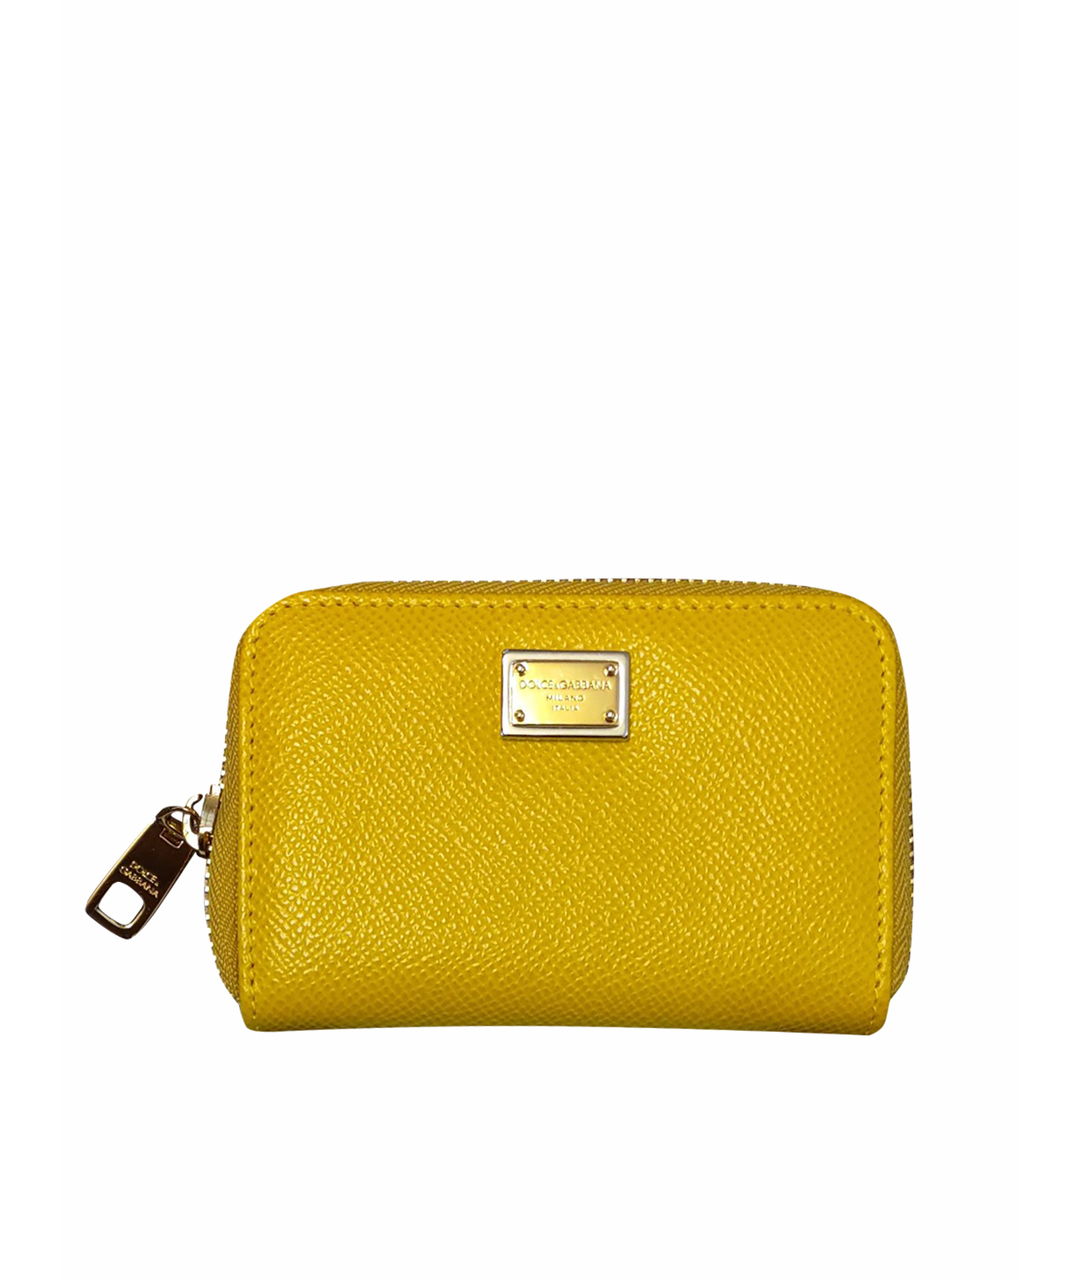 DOLCE&GABBANA Желтый кожаный кошелек, фото 1